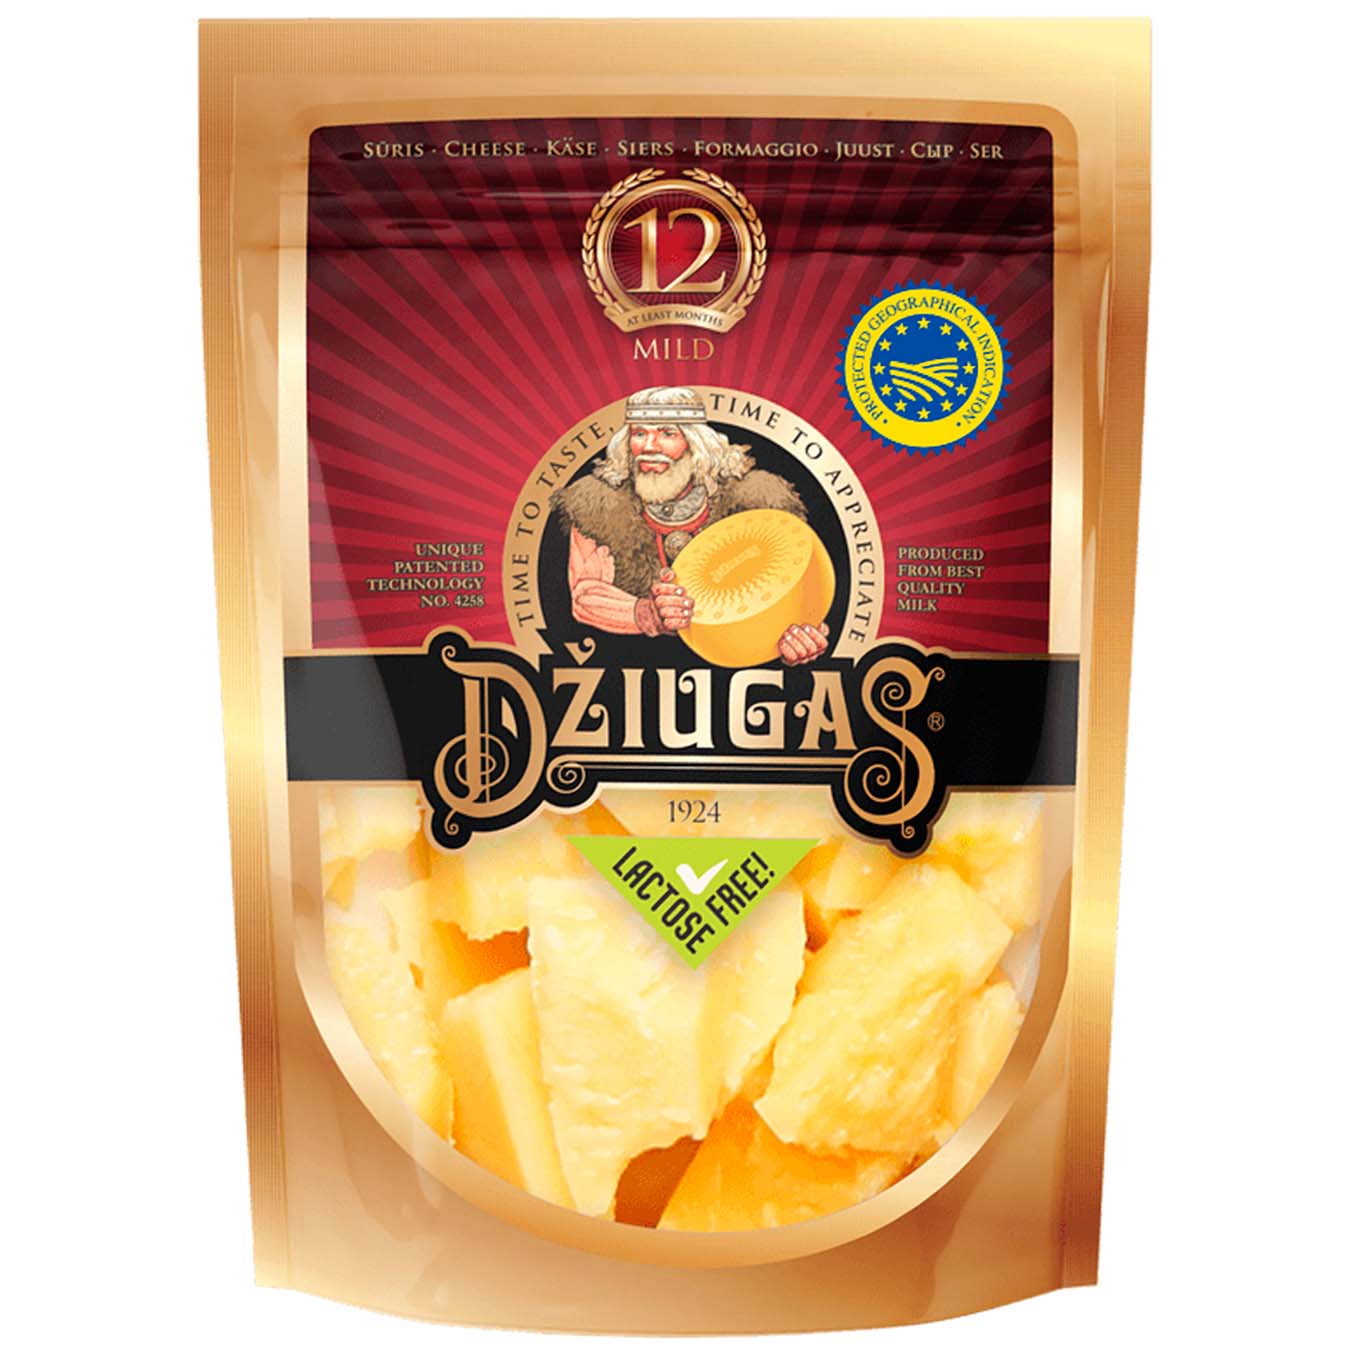 Hard cheese Dziugas repined 12 months mild 40% 100g